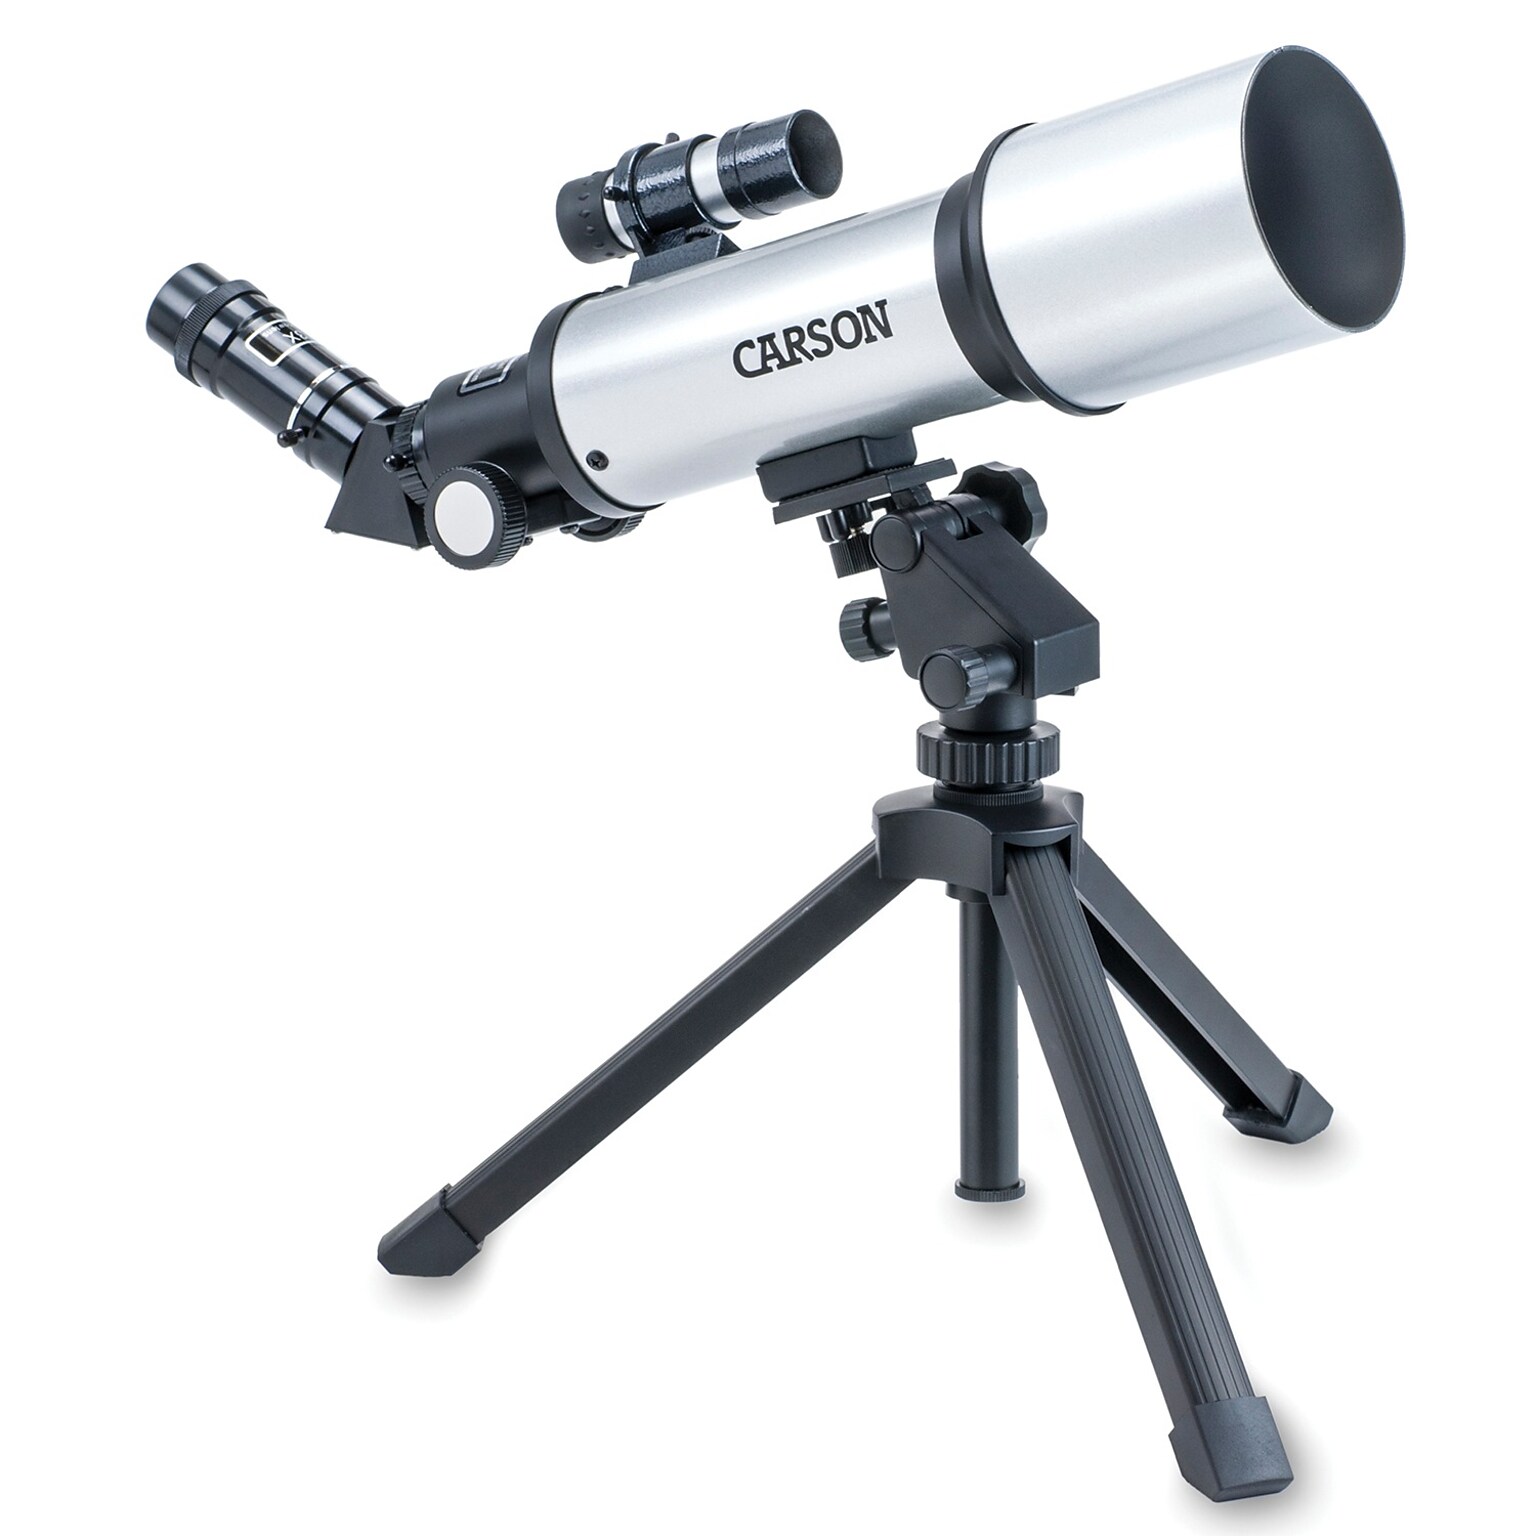 CARSON SkyChaser 70 mm Refractor Beginner Telescope with Tabletop Tripod, Silver (SC-450)